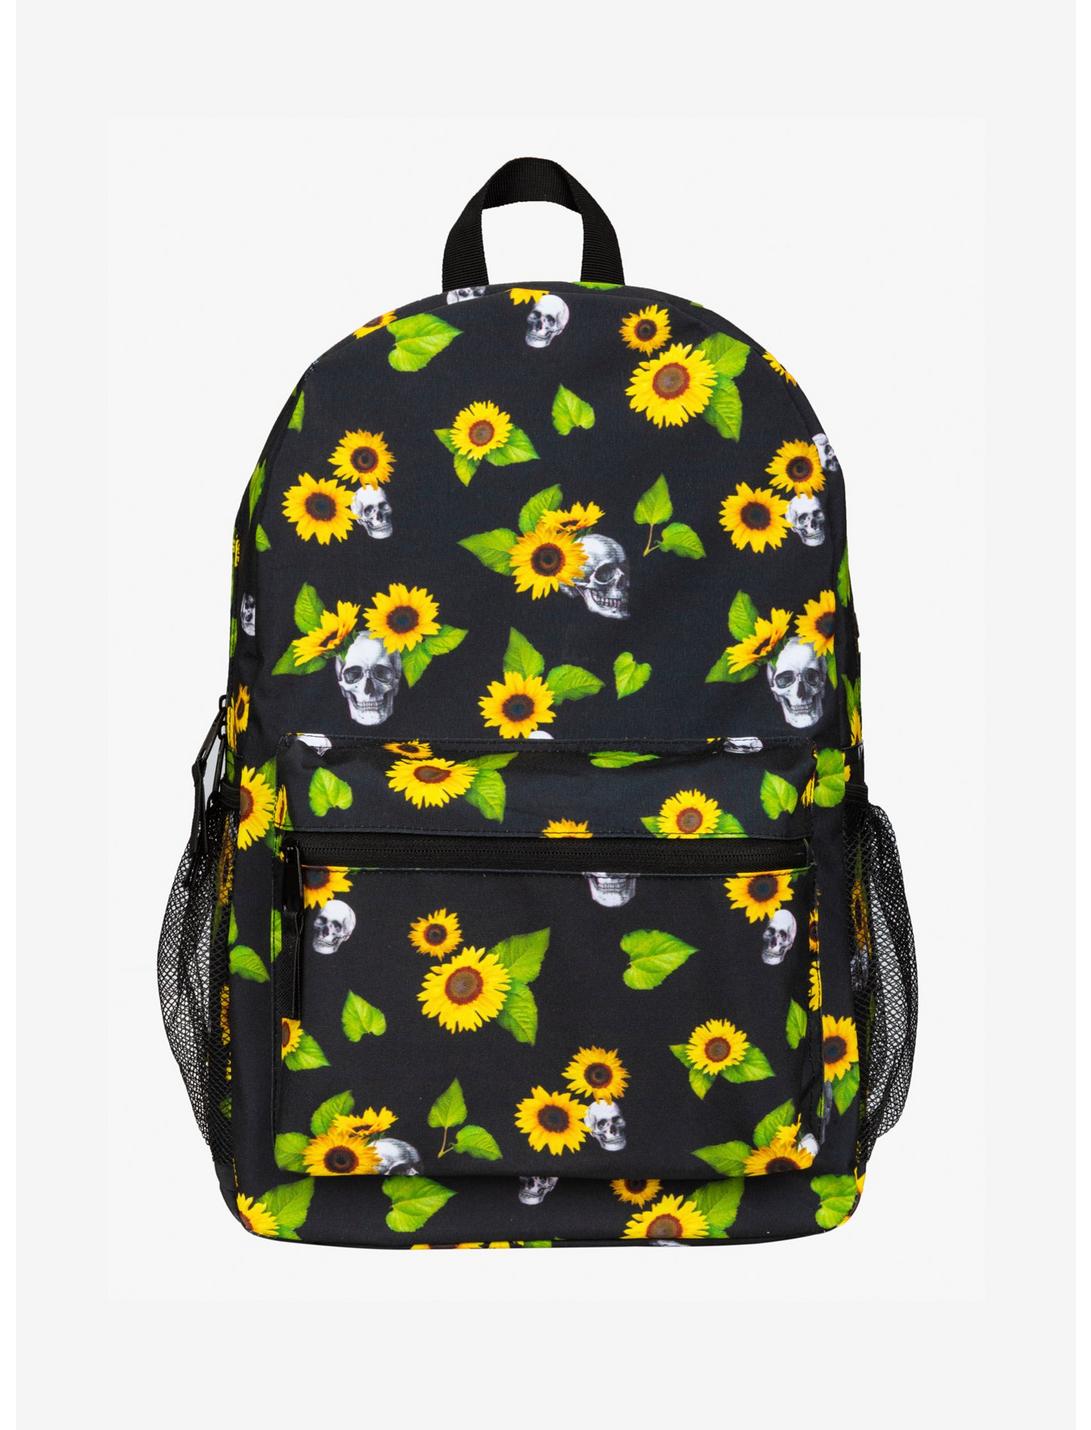 Sunflowers & Skulls Backpack, , hi-res